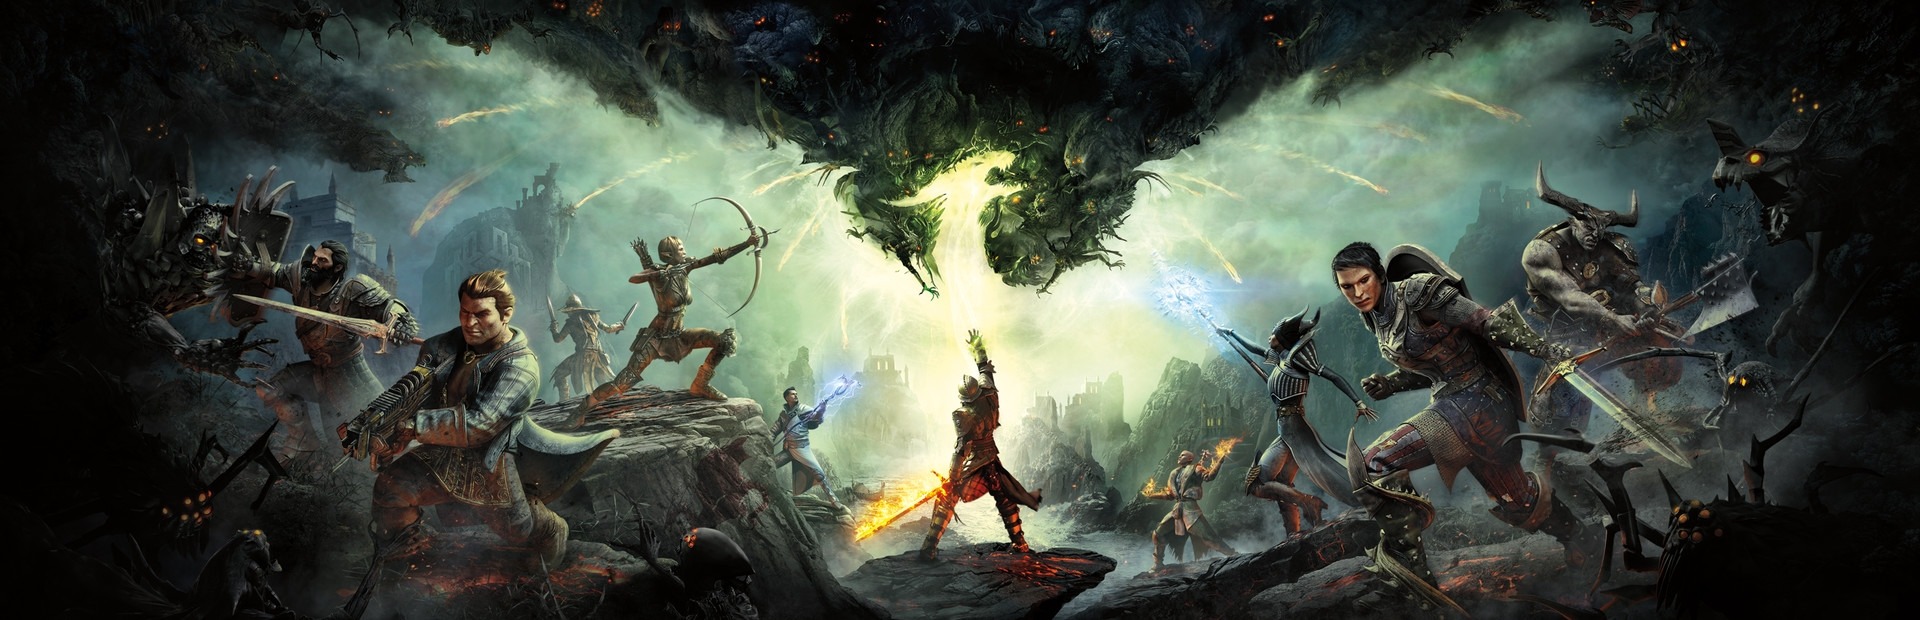 Banner Dragon Age: Inquisition - The Descent